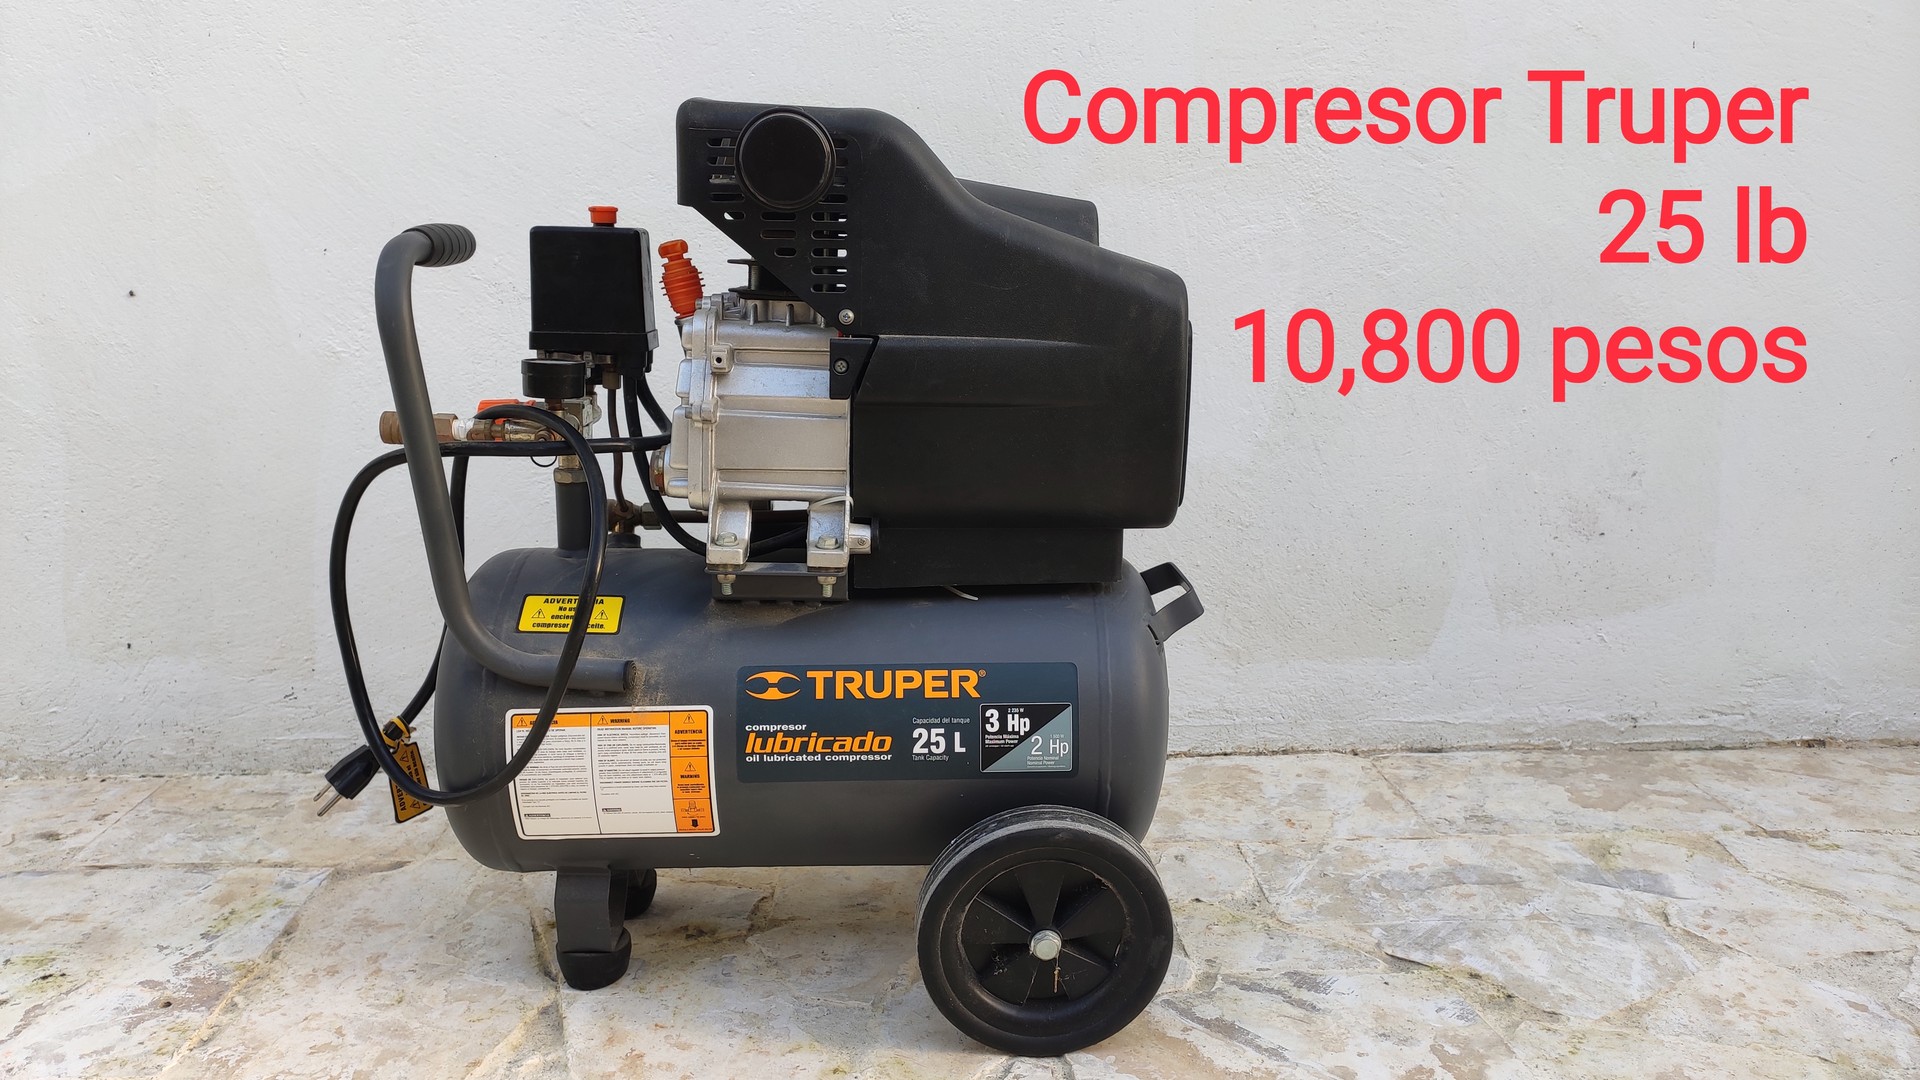  Compresor Truper